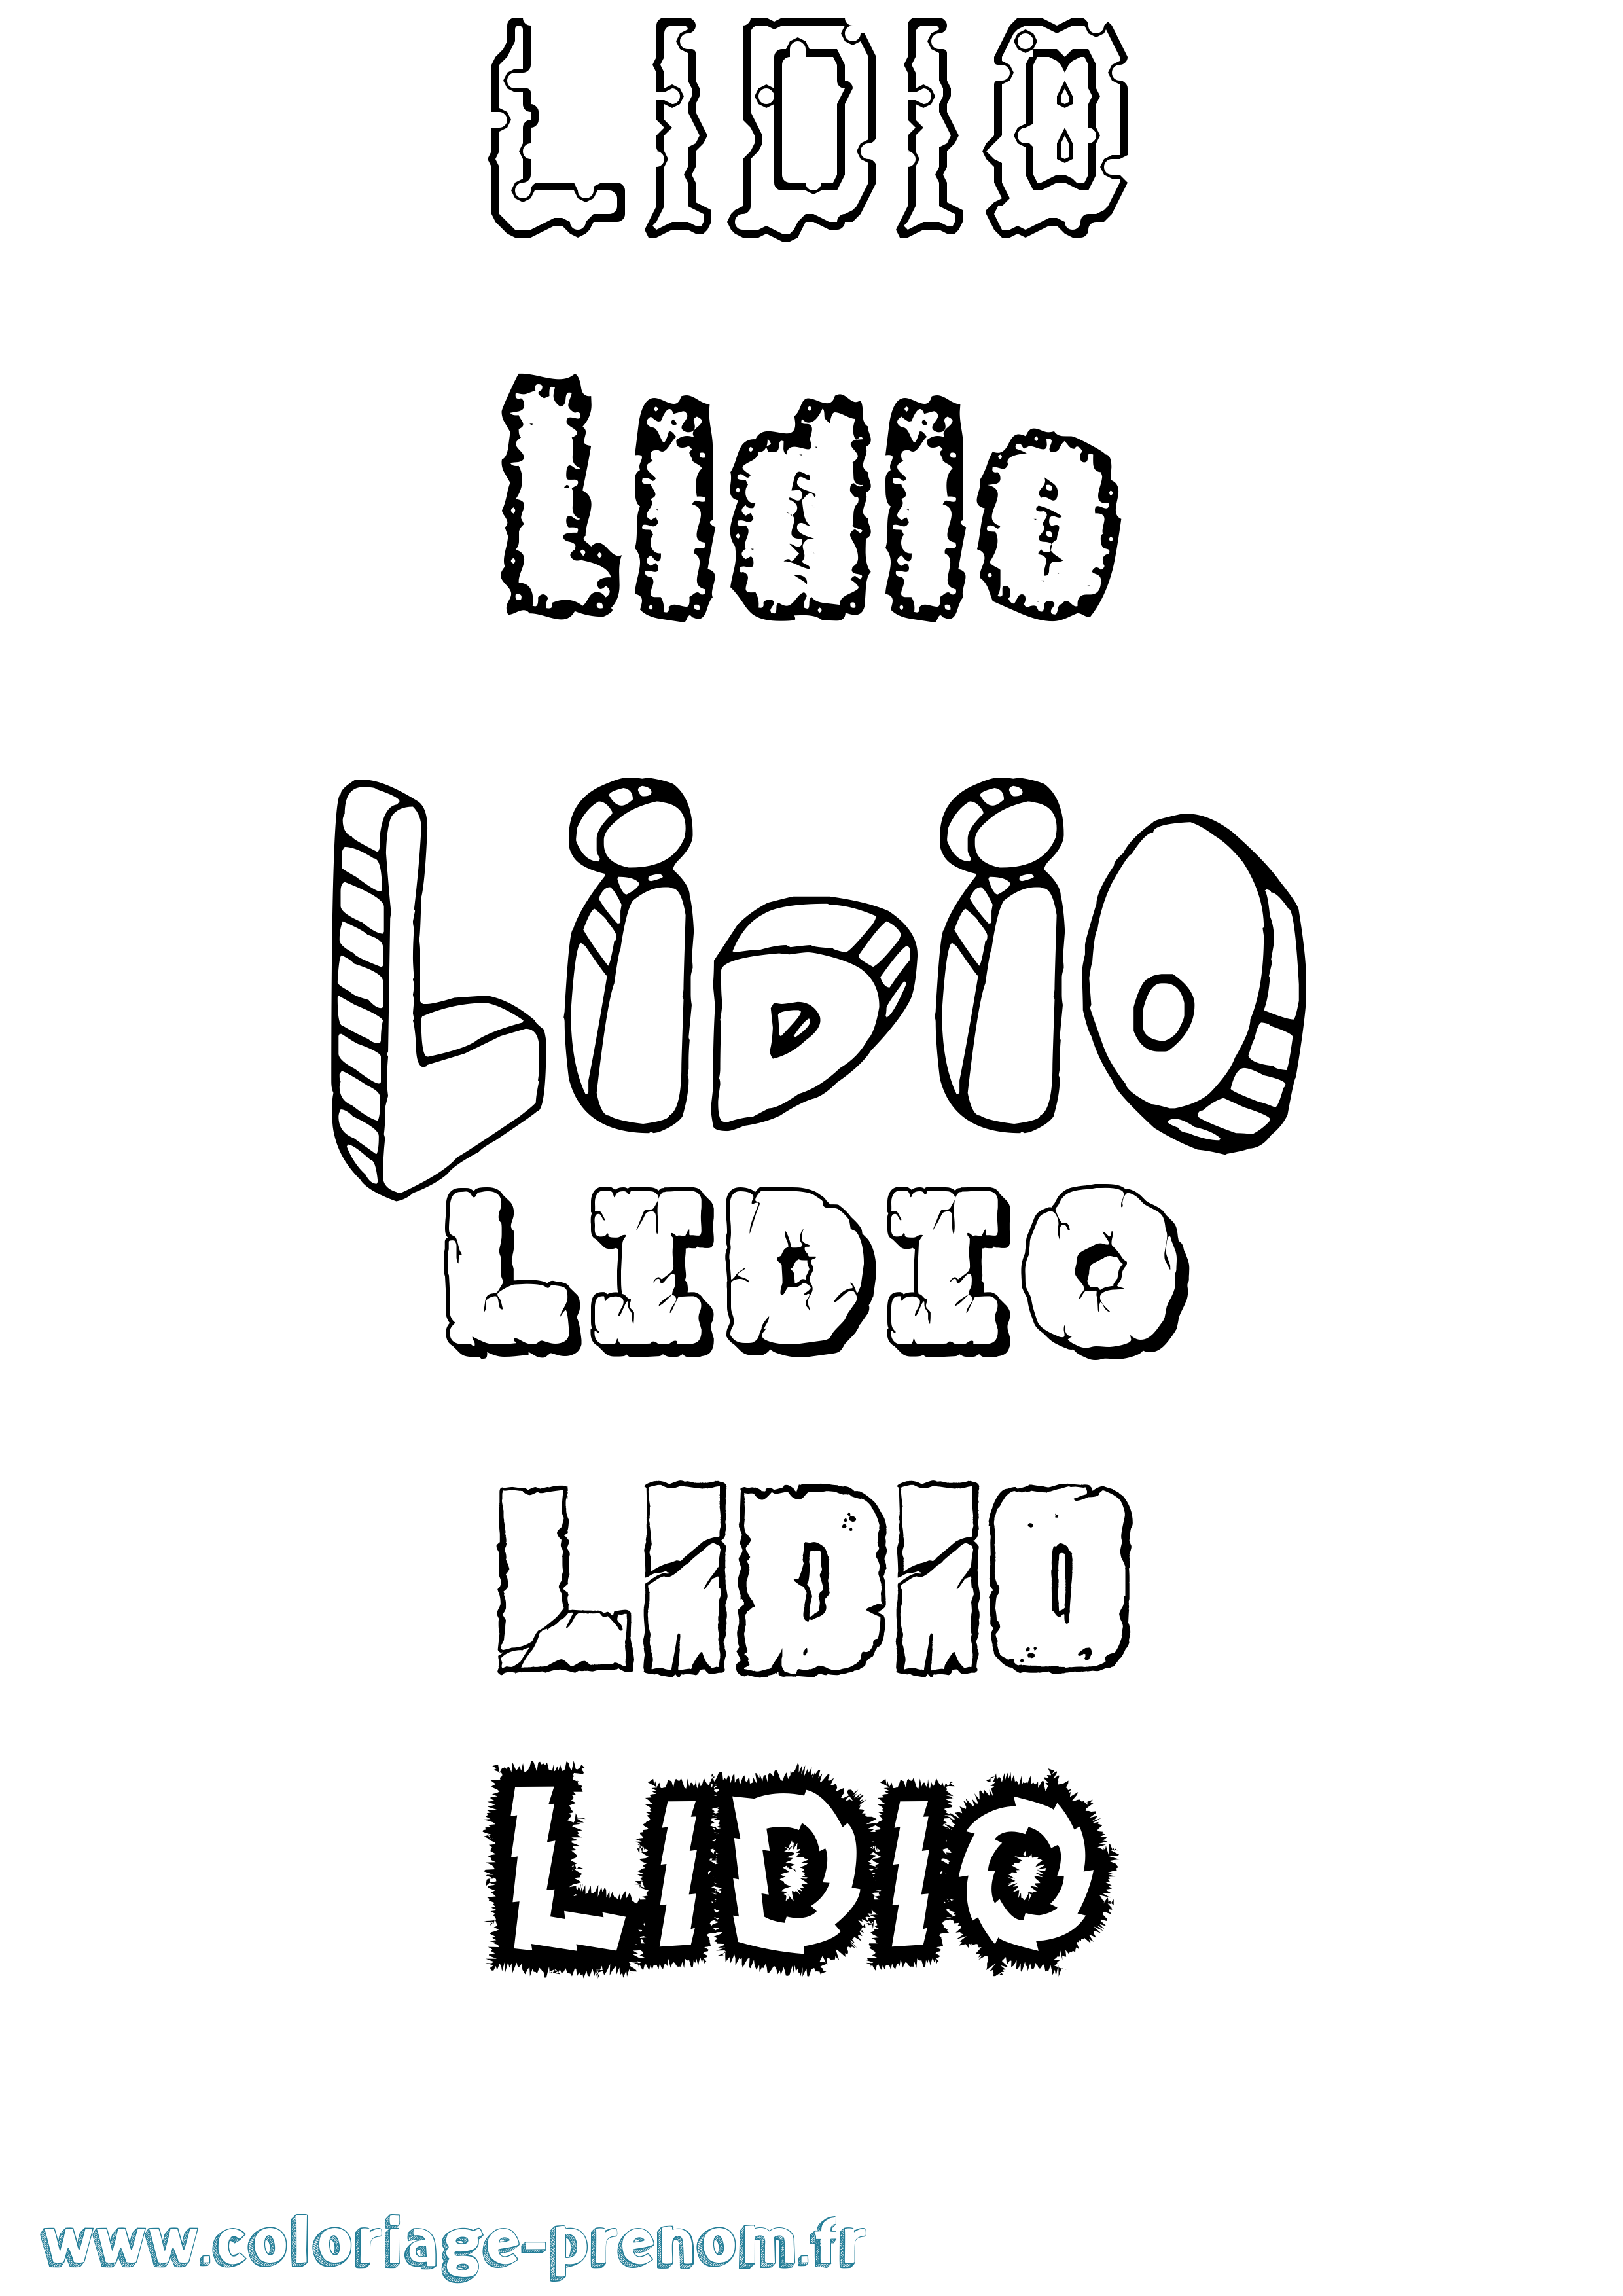 Coloriage prénom Lidio Destructuré